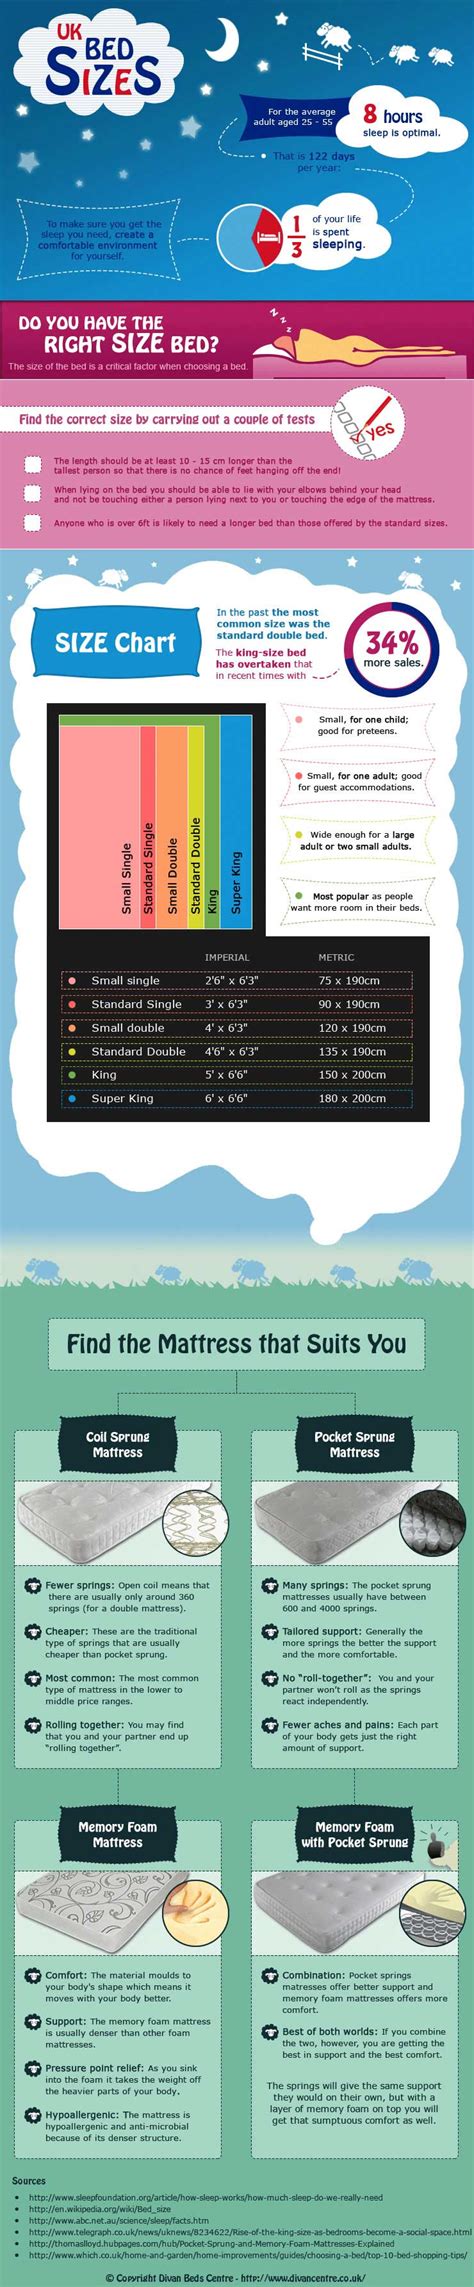 uk beds sizes infographic